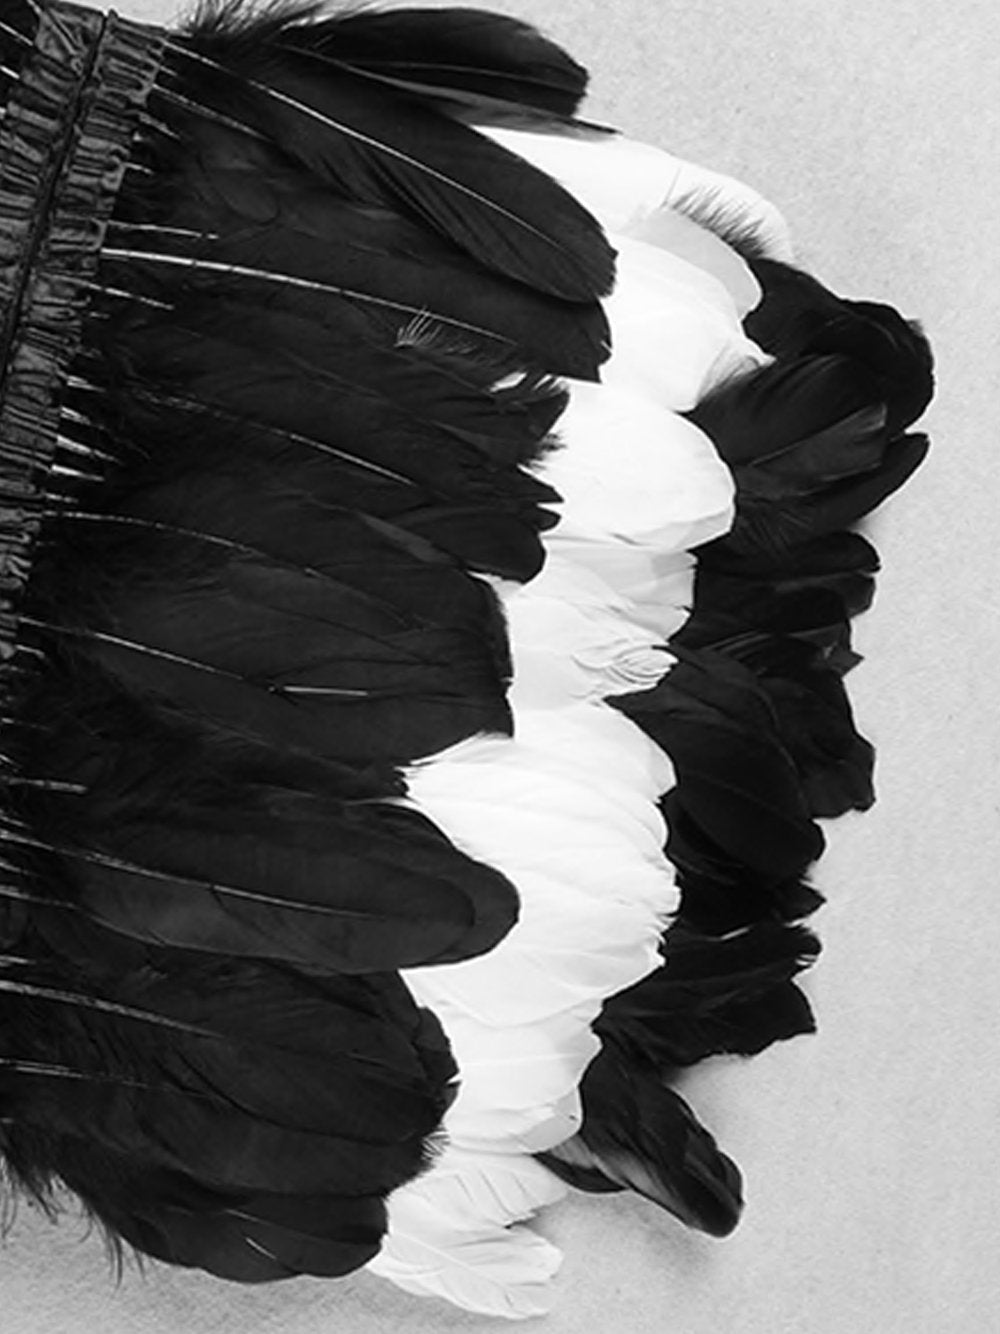 SO LIBERTY Feathers Tassel Dress